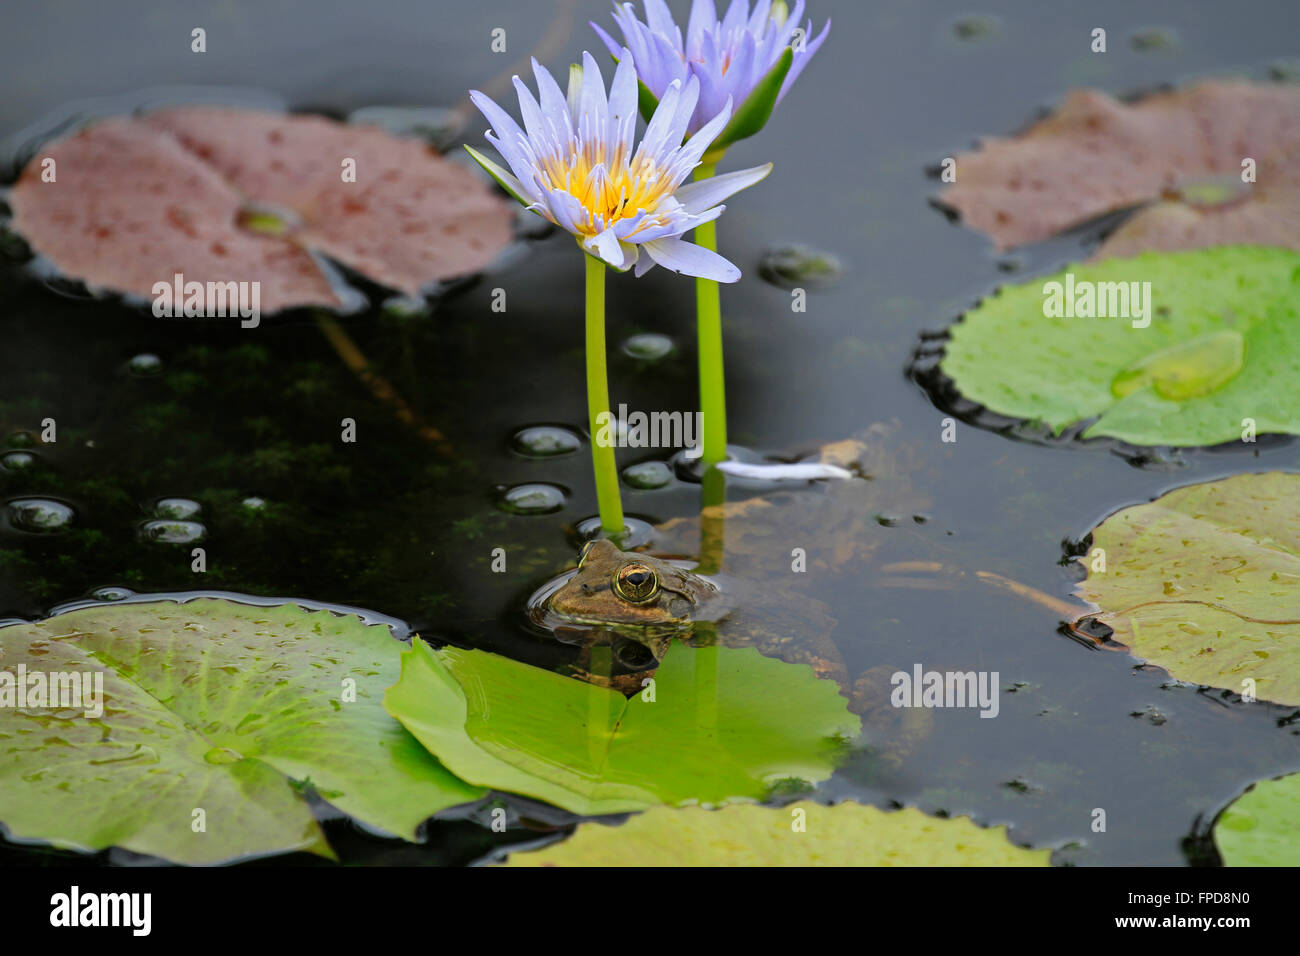 Cape river frog (Amietia fuscigula) next to a Blue water lily (Nymphaea caerulea) in the Harold Porter Garden Stock Photo